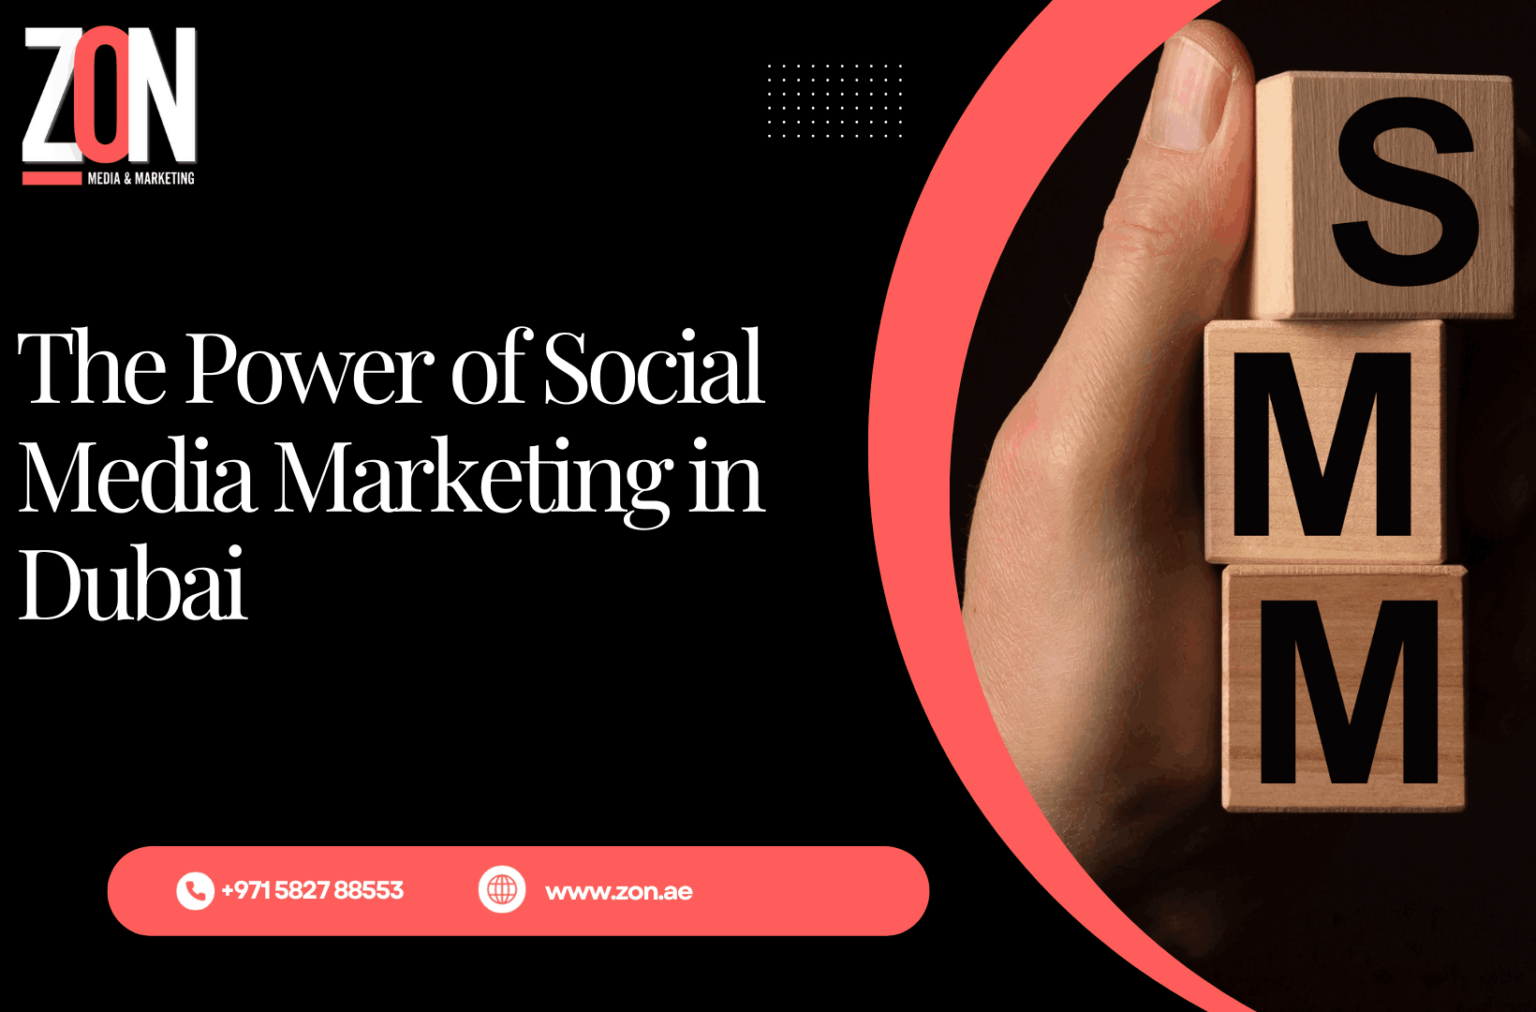 The Power of Social Media Marketing in Dubai